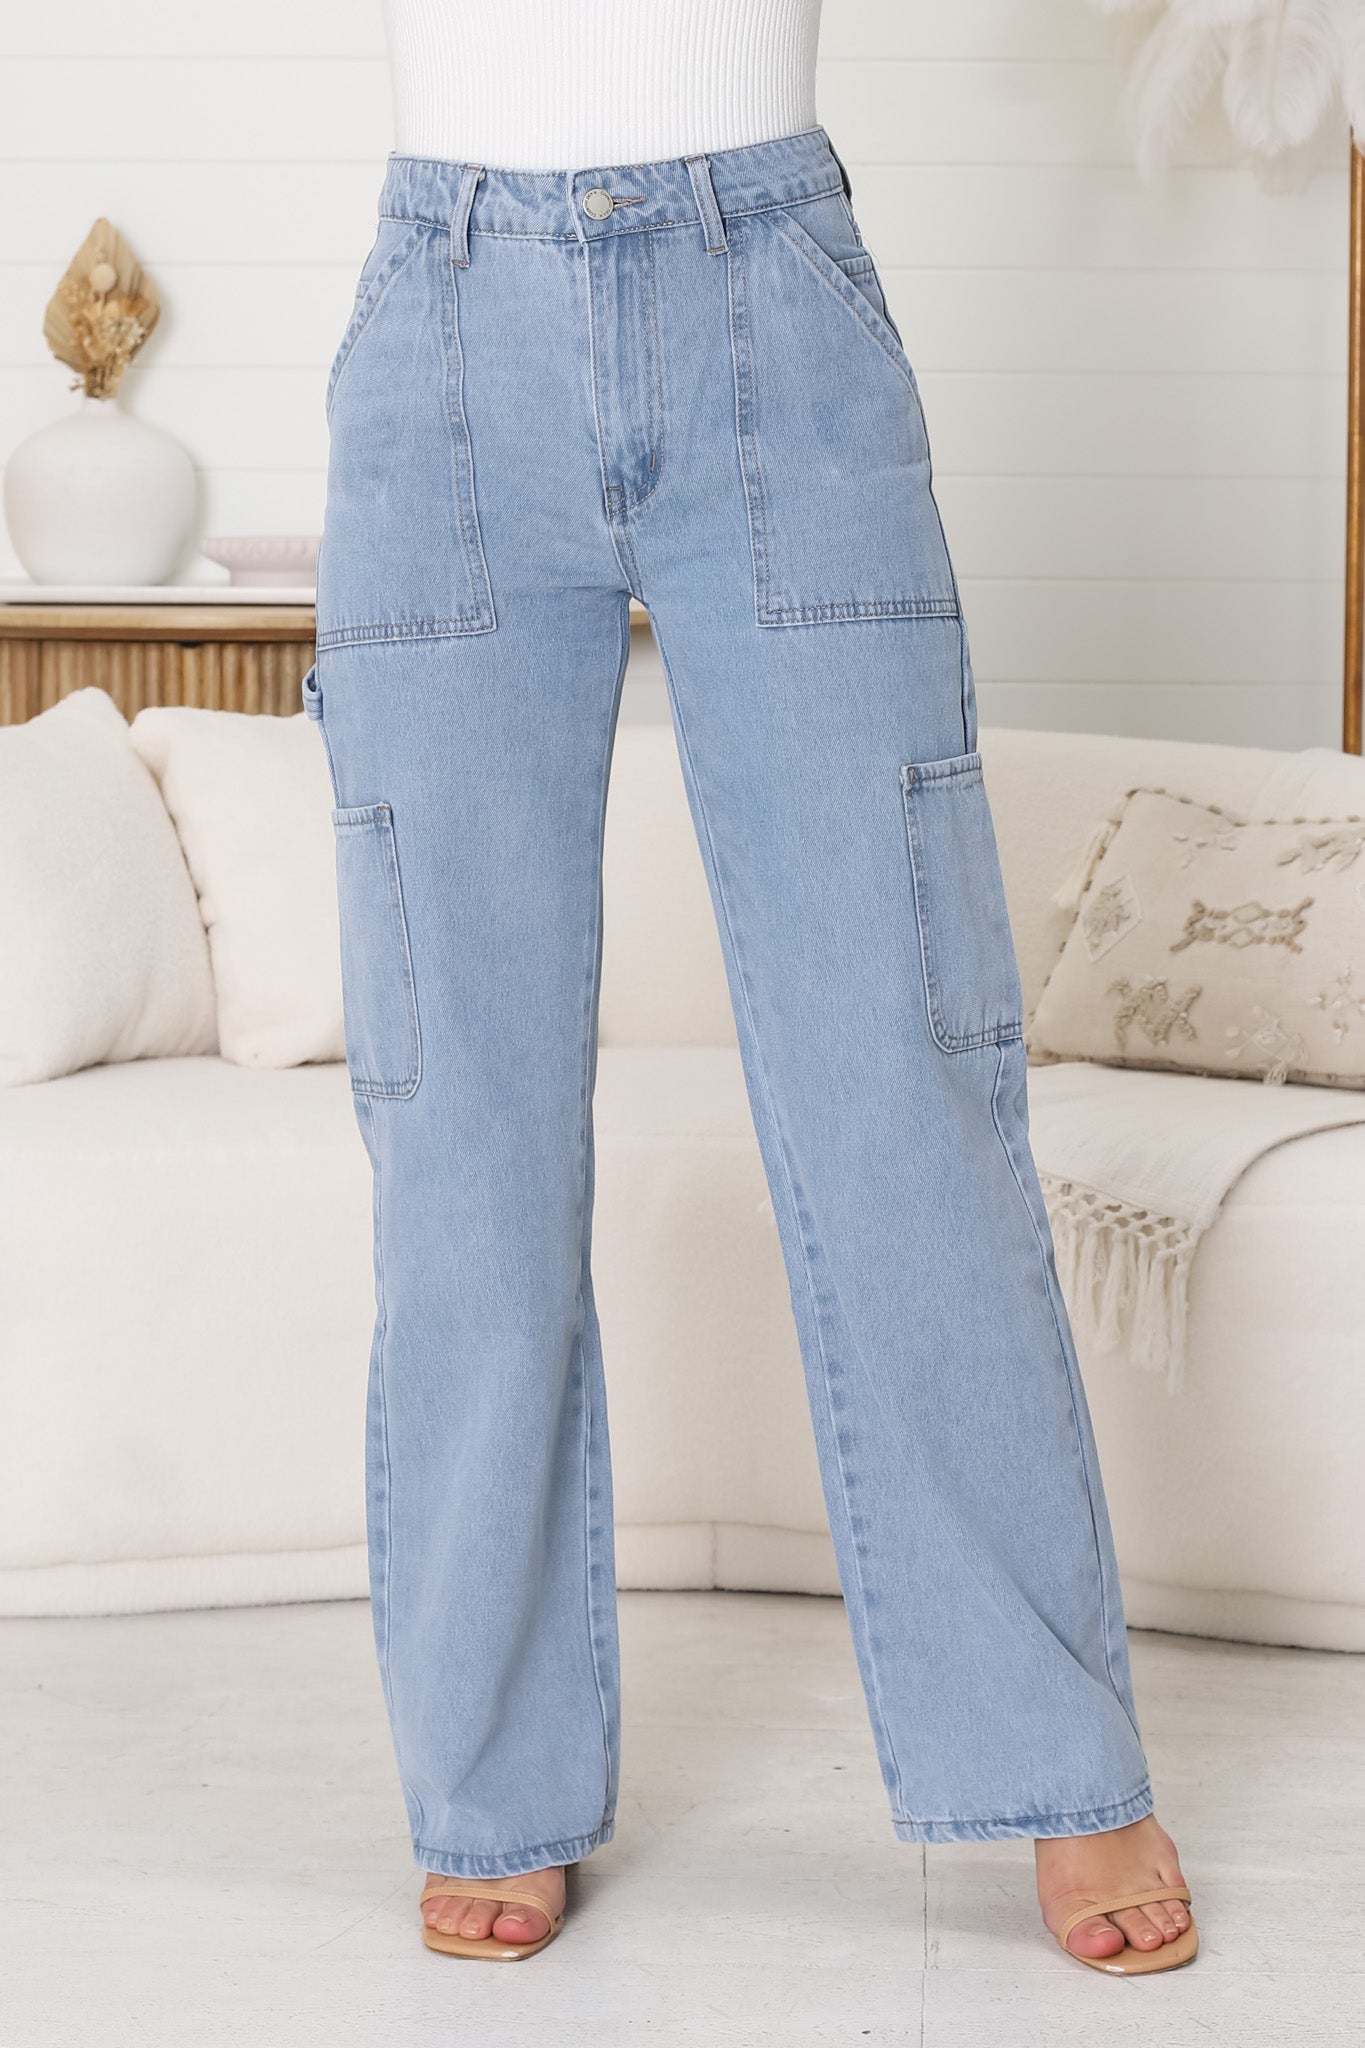 Chakra Cargo Pants - Straight Leg High Waist Cargo Jeans in Light Denim